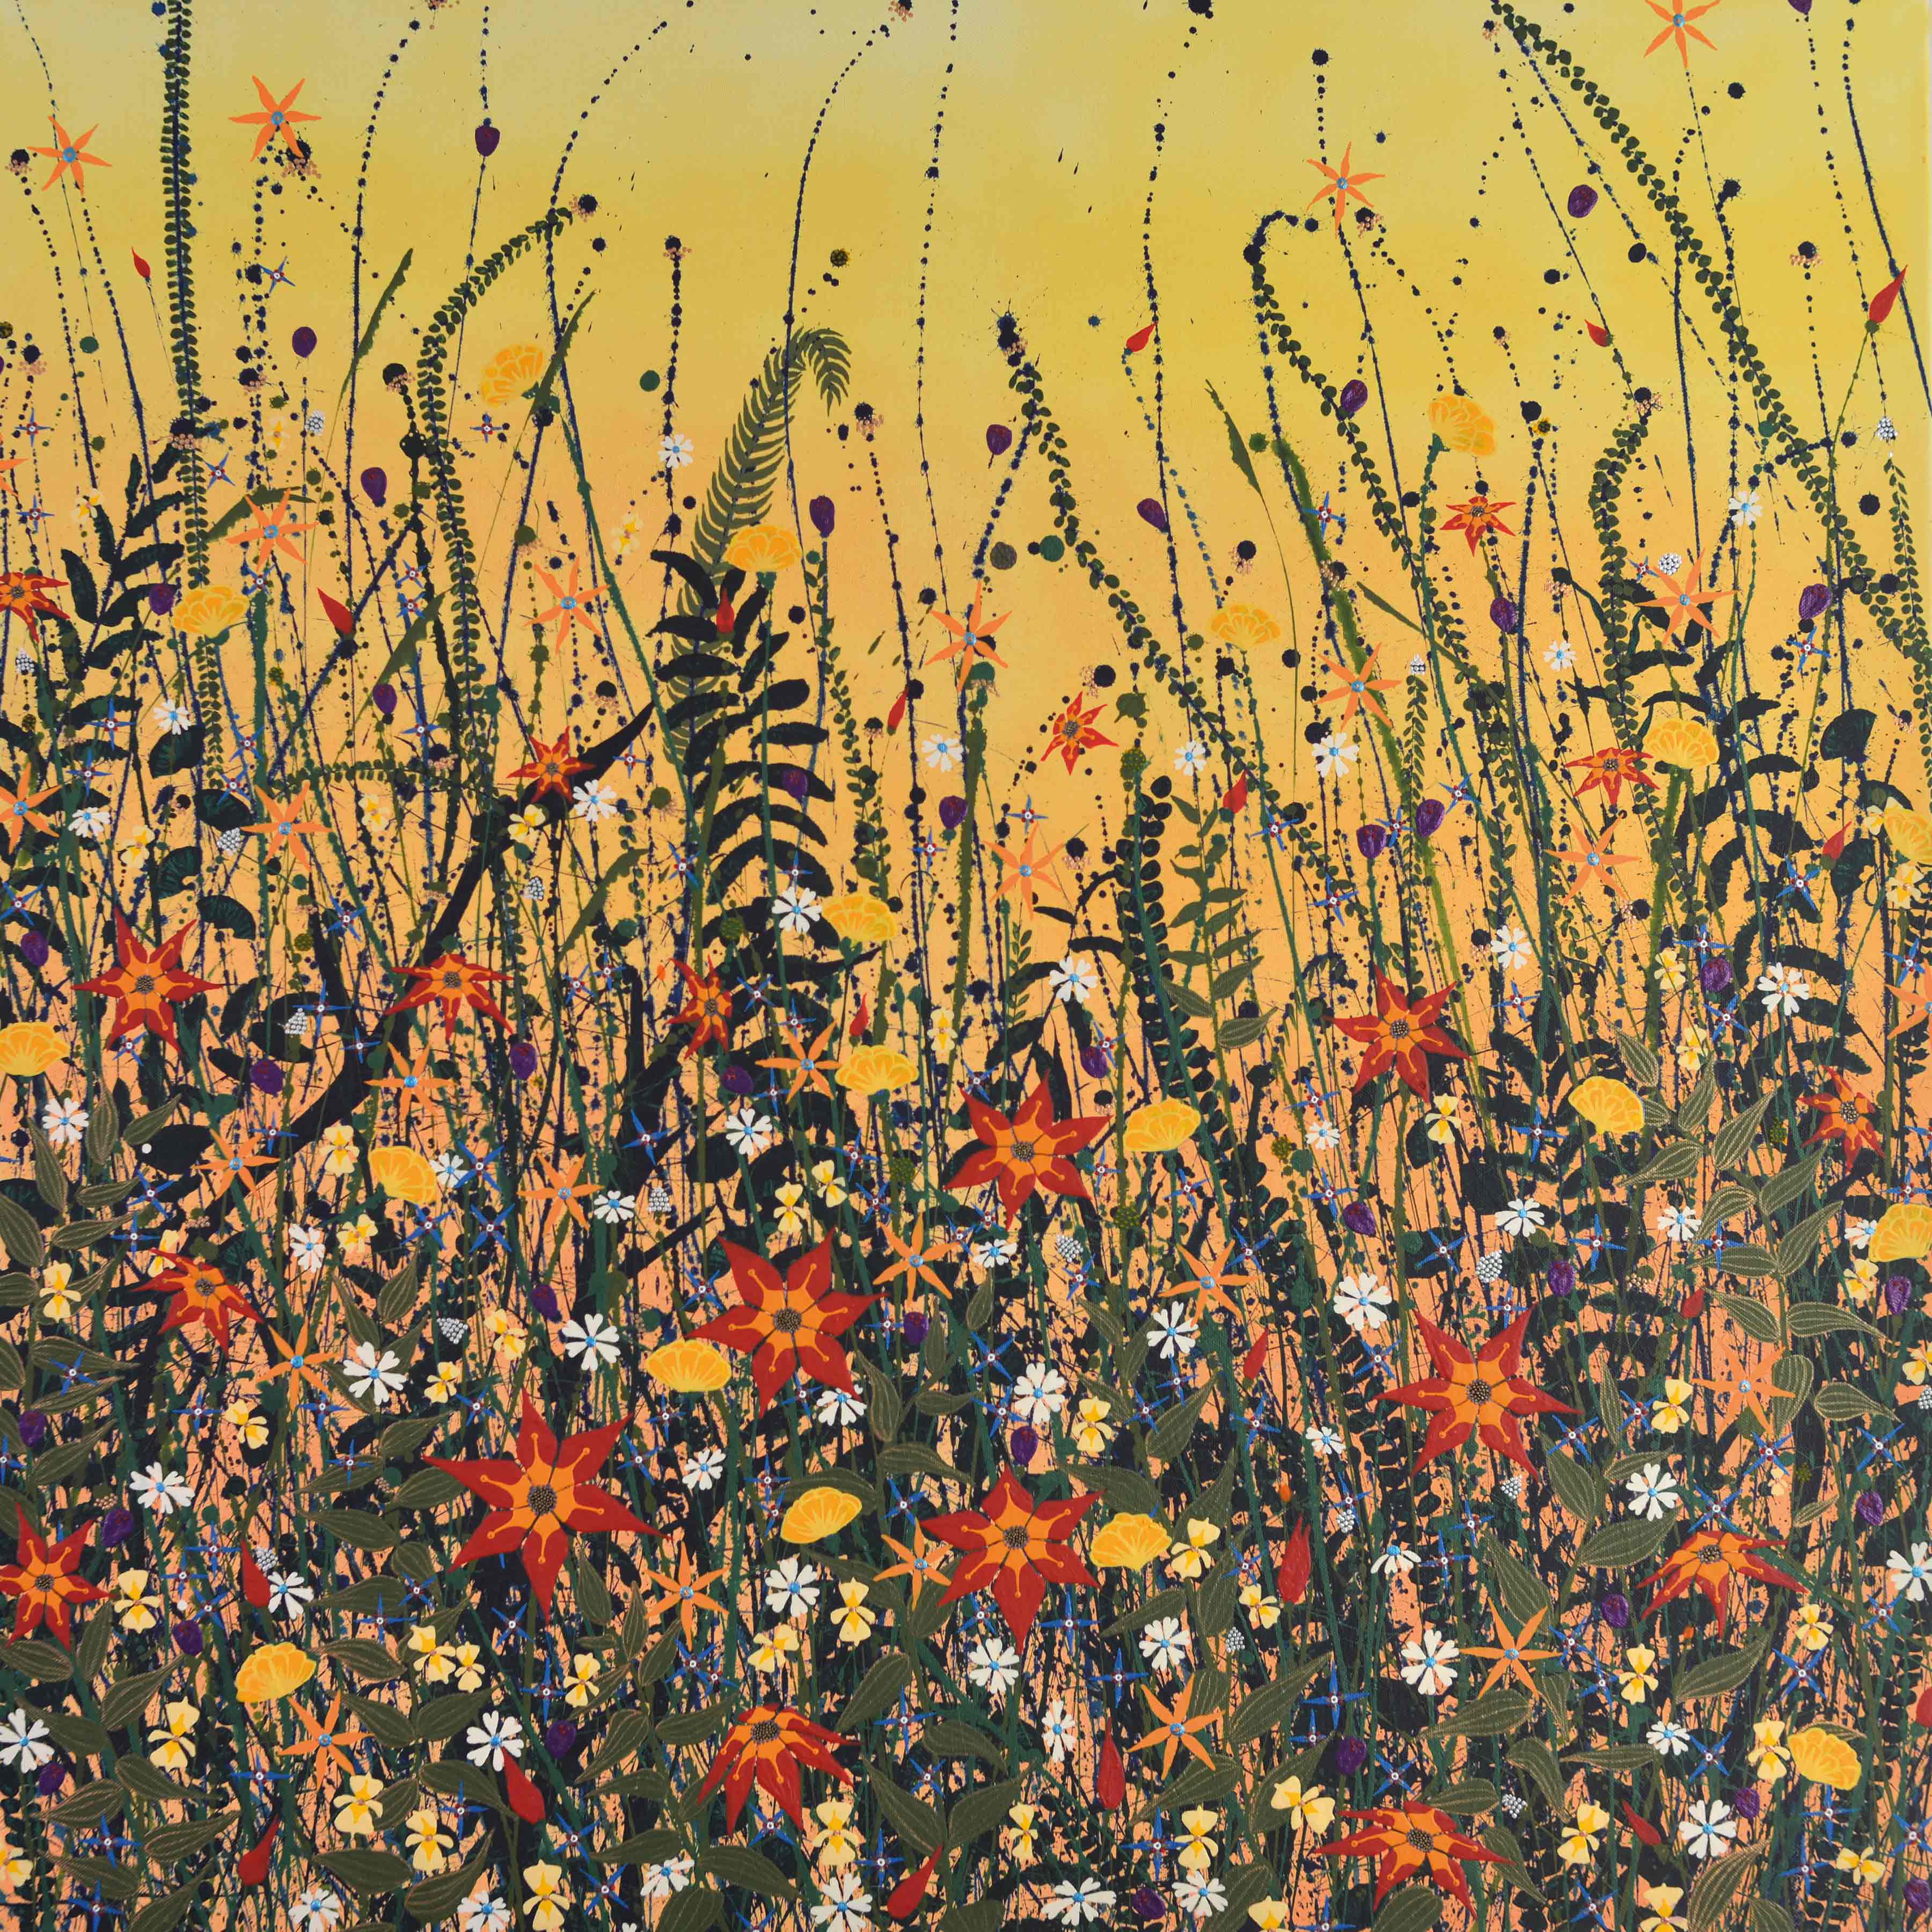 Art Greeting Card by Carla Vize-Martin, Goldrush, Mixed media, Meadow flowers